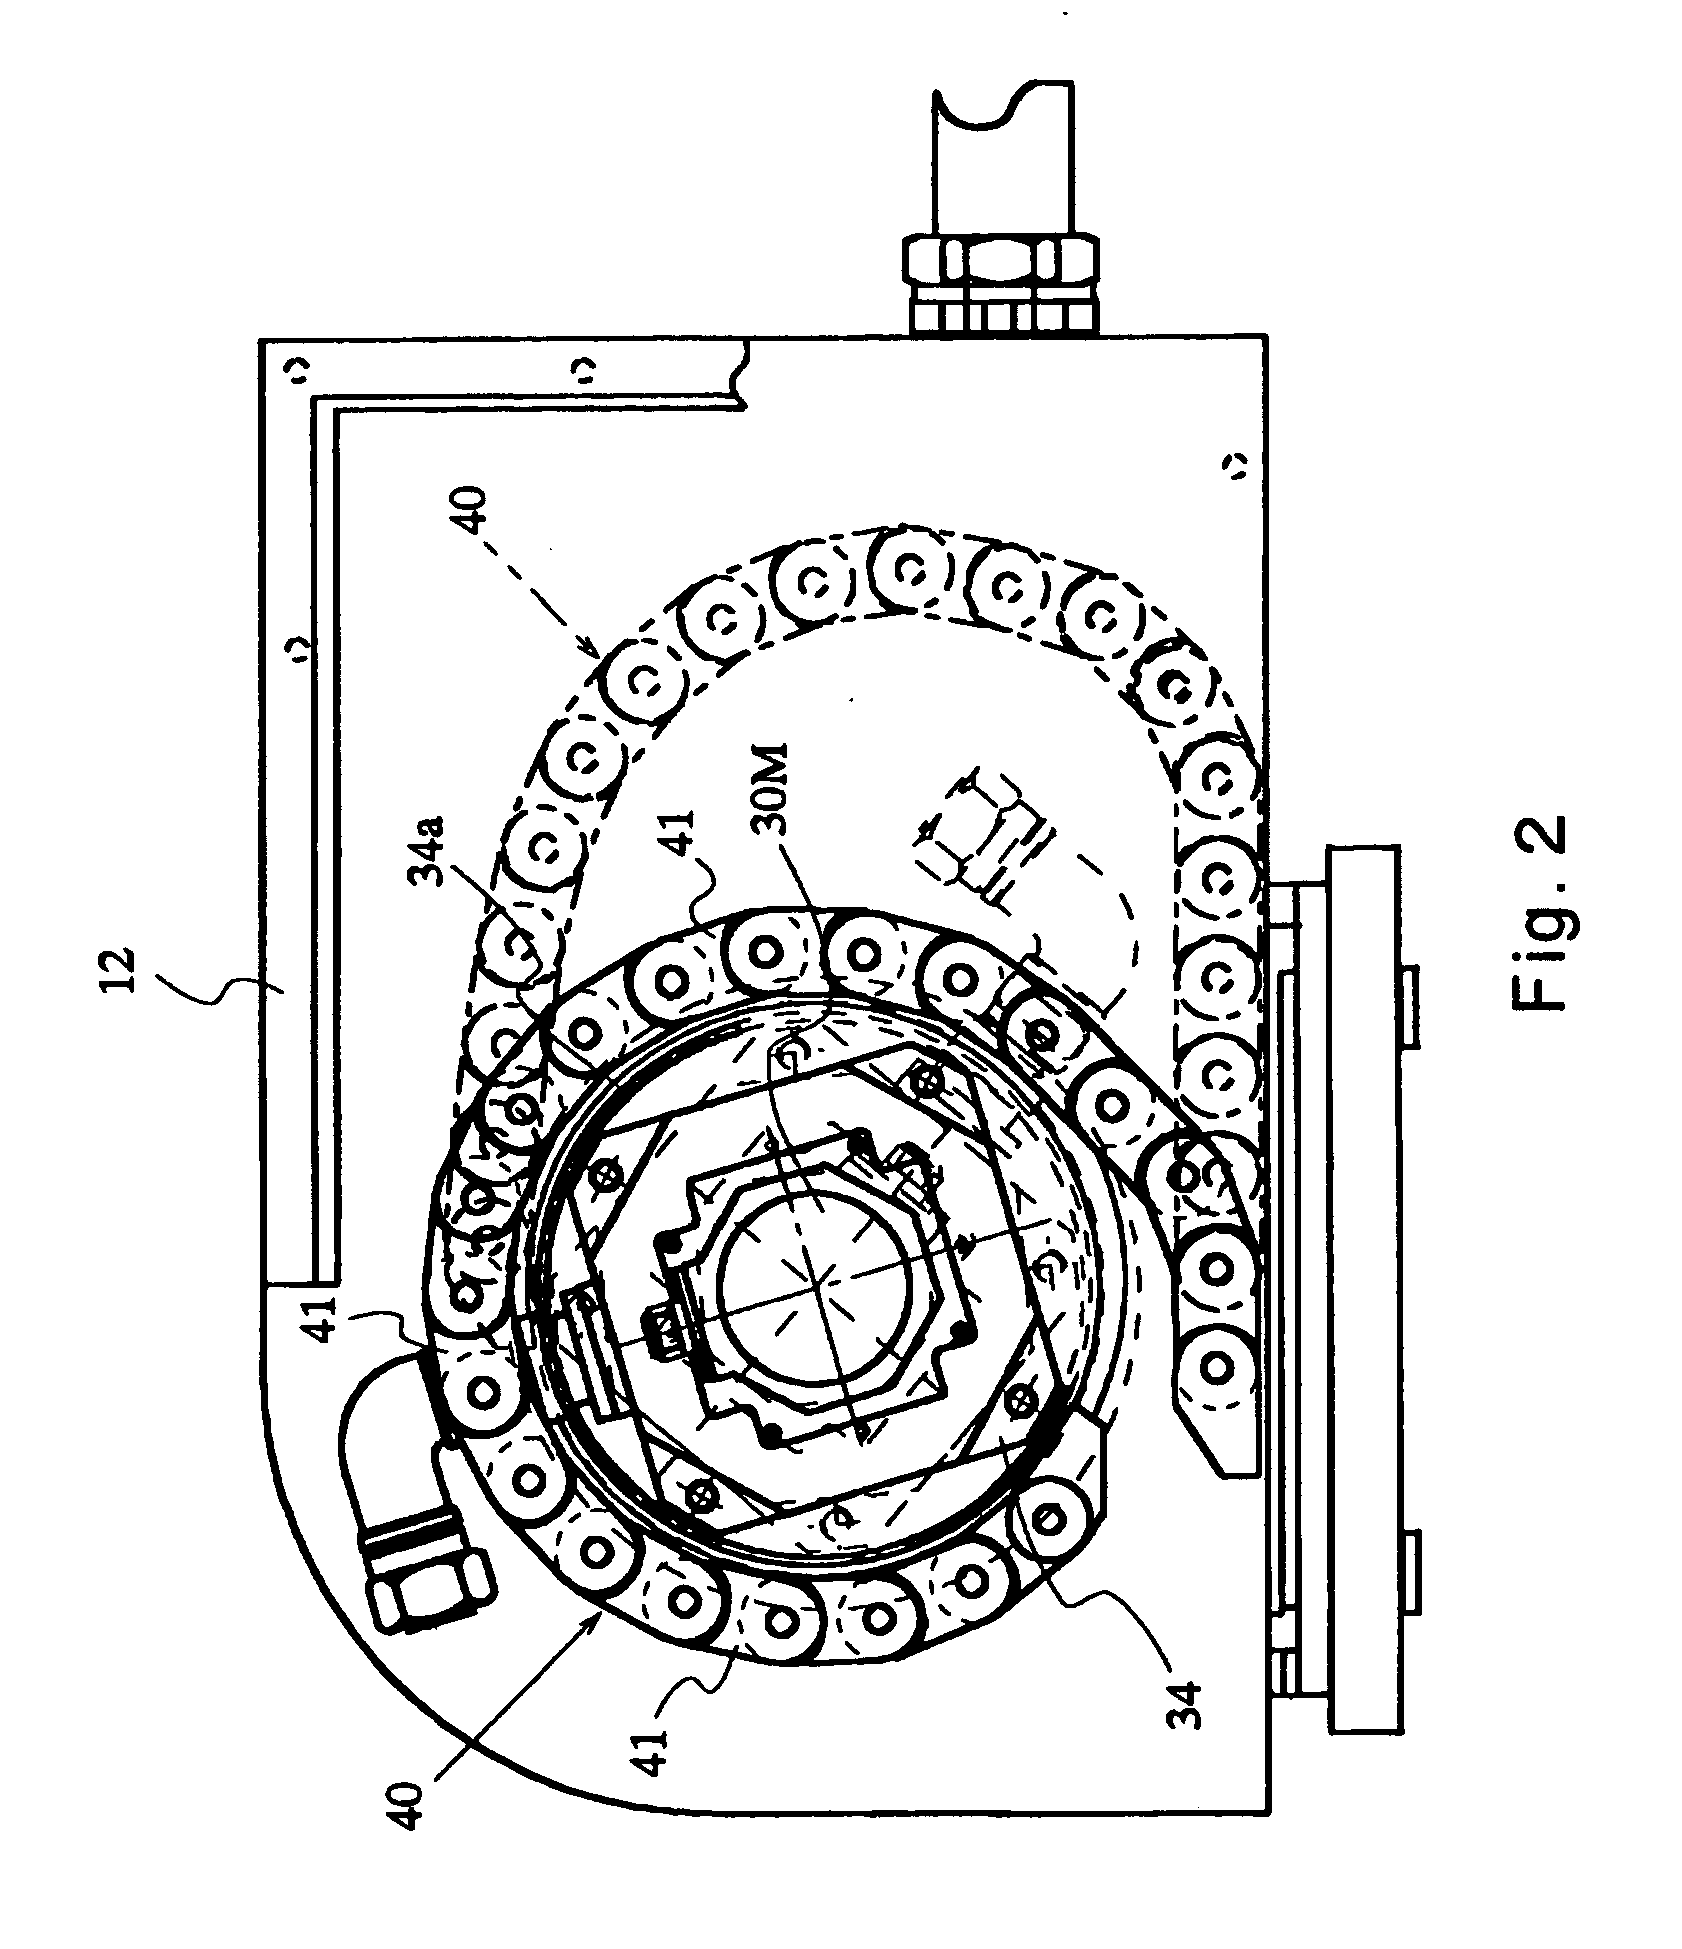 Tiltable-rotatable circular-table device for machine tool